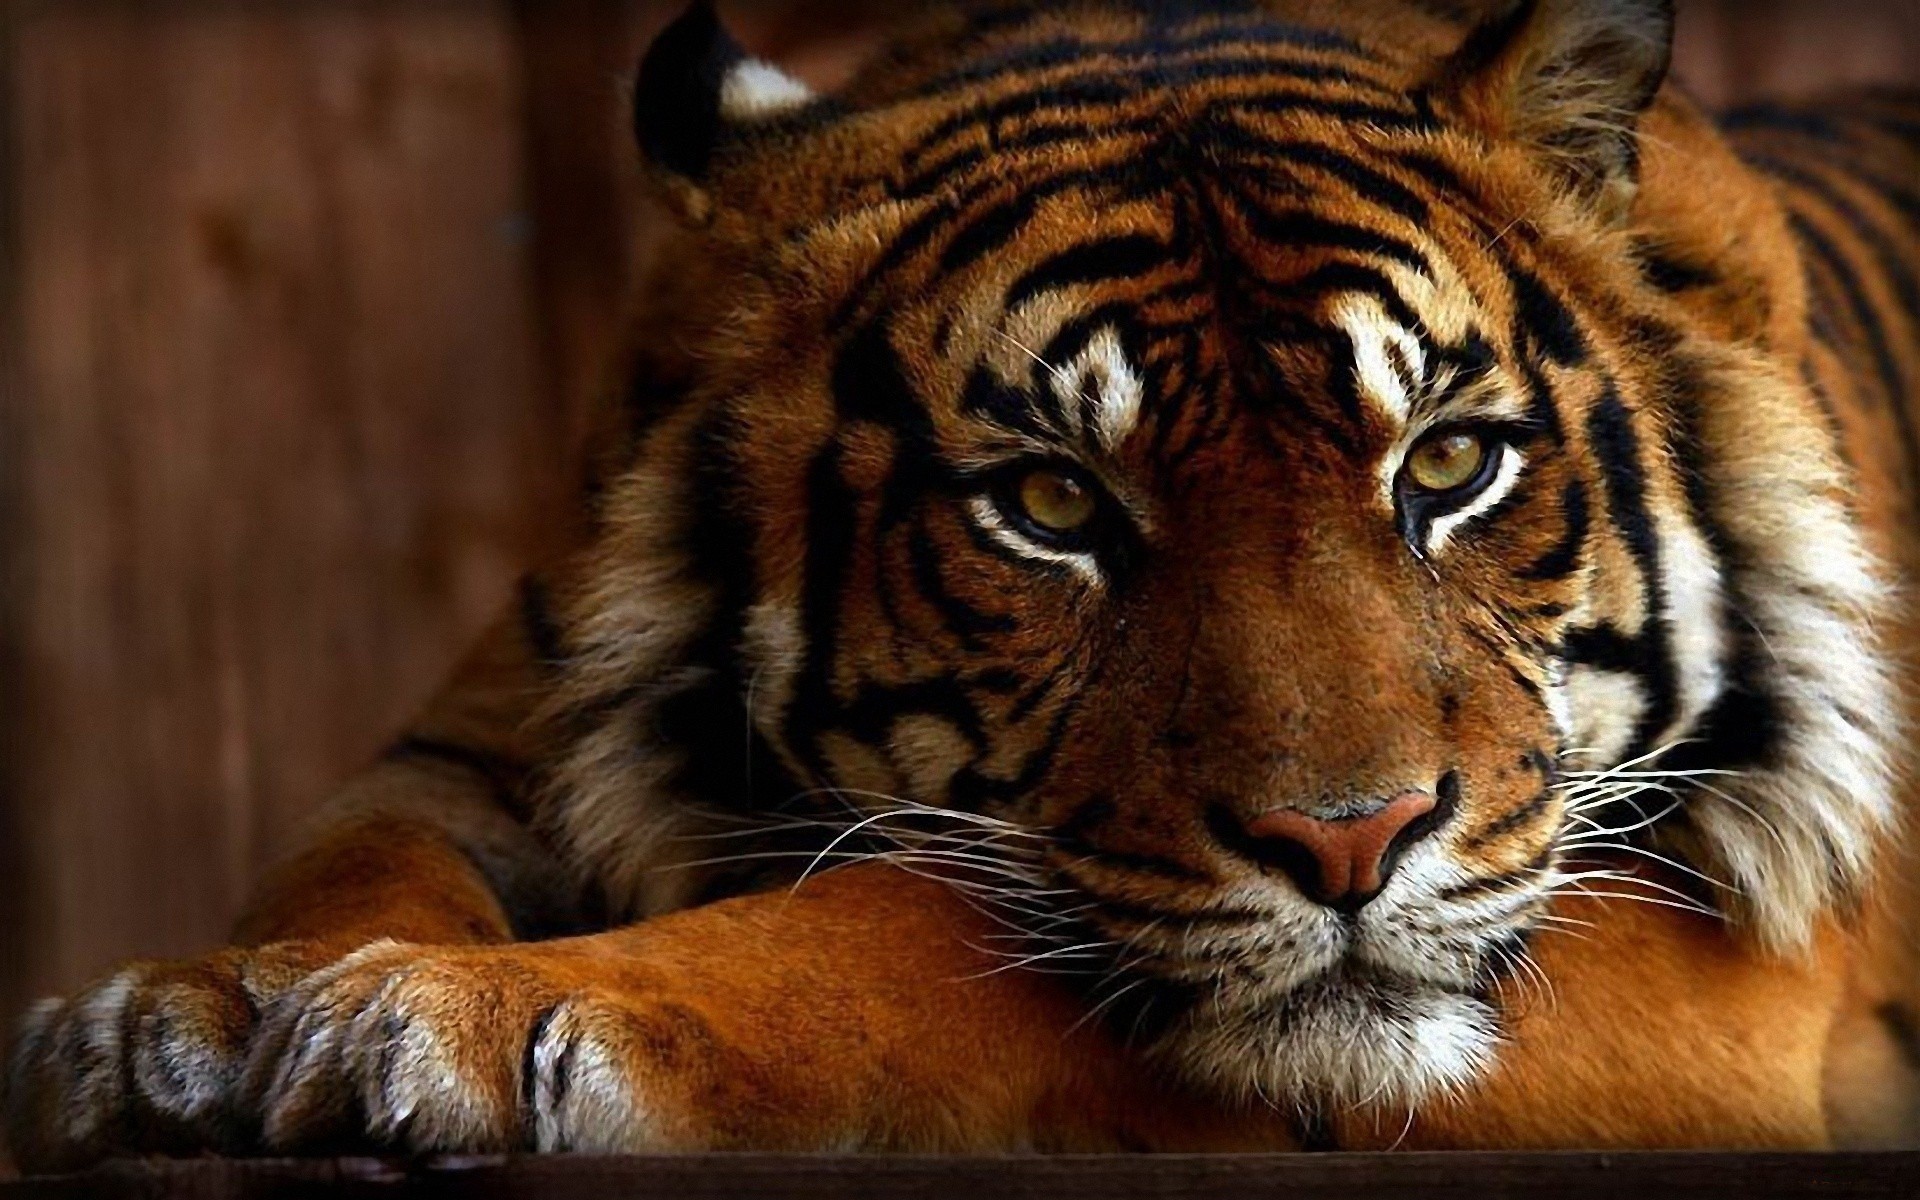 Tiger Wallpaper 3D Picture | Animals Wallpapers | Pinterest | 3D Wallpaper,  Wallpaper And 3D